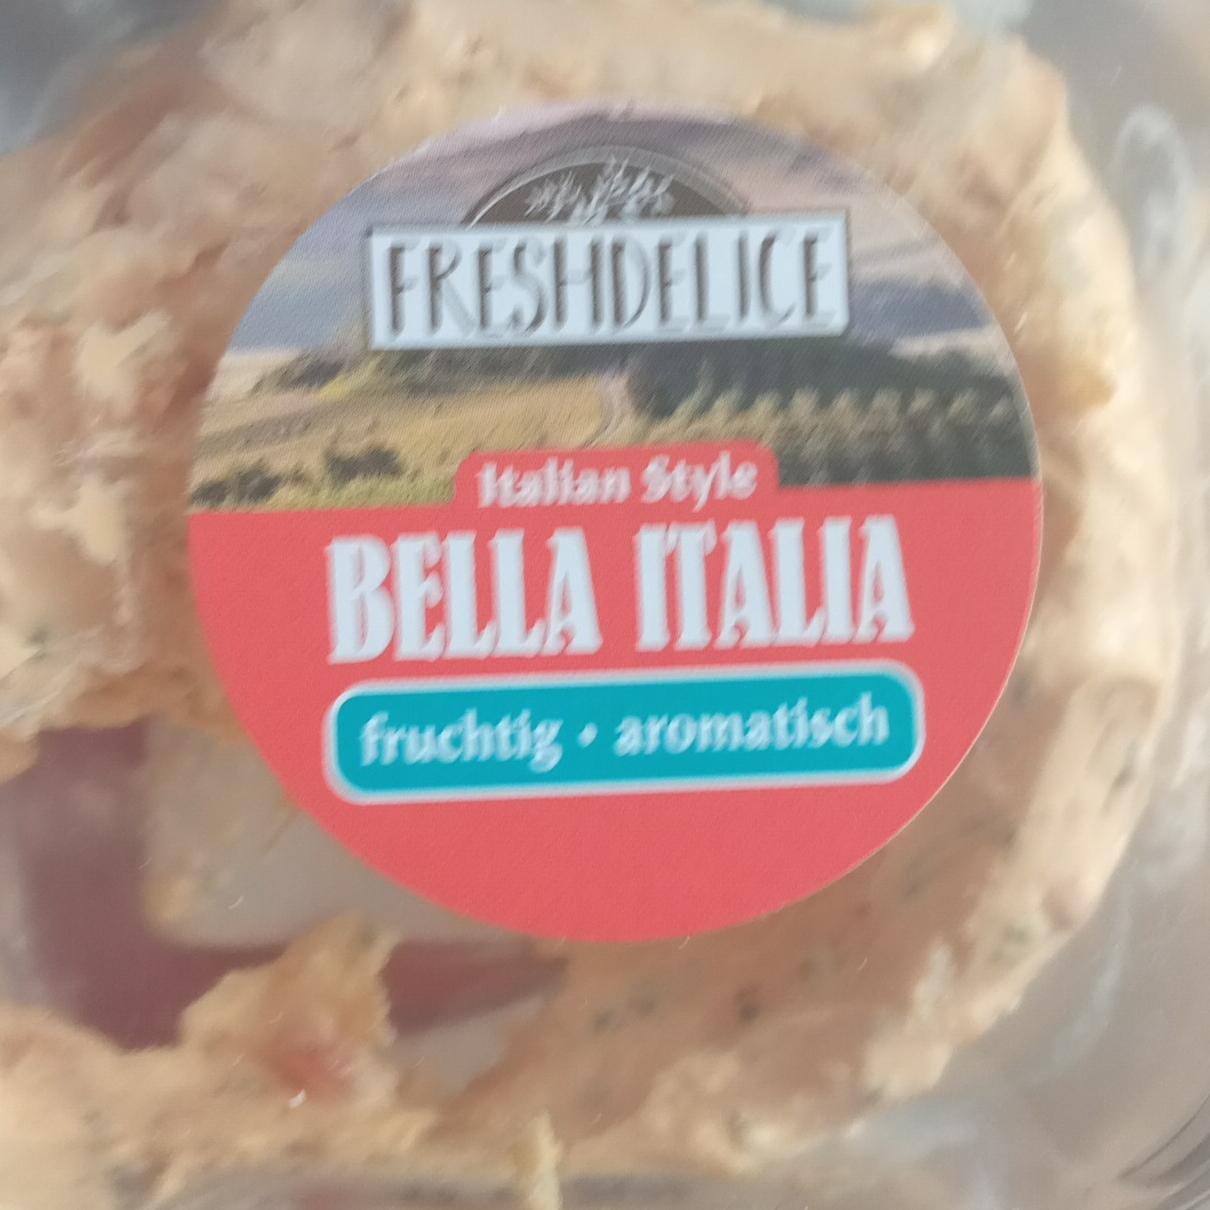 Fotografie - Italian style Bella Italia Freshdelice